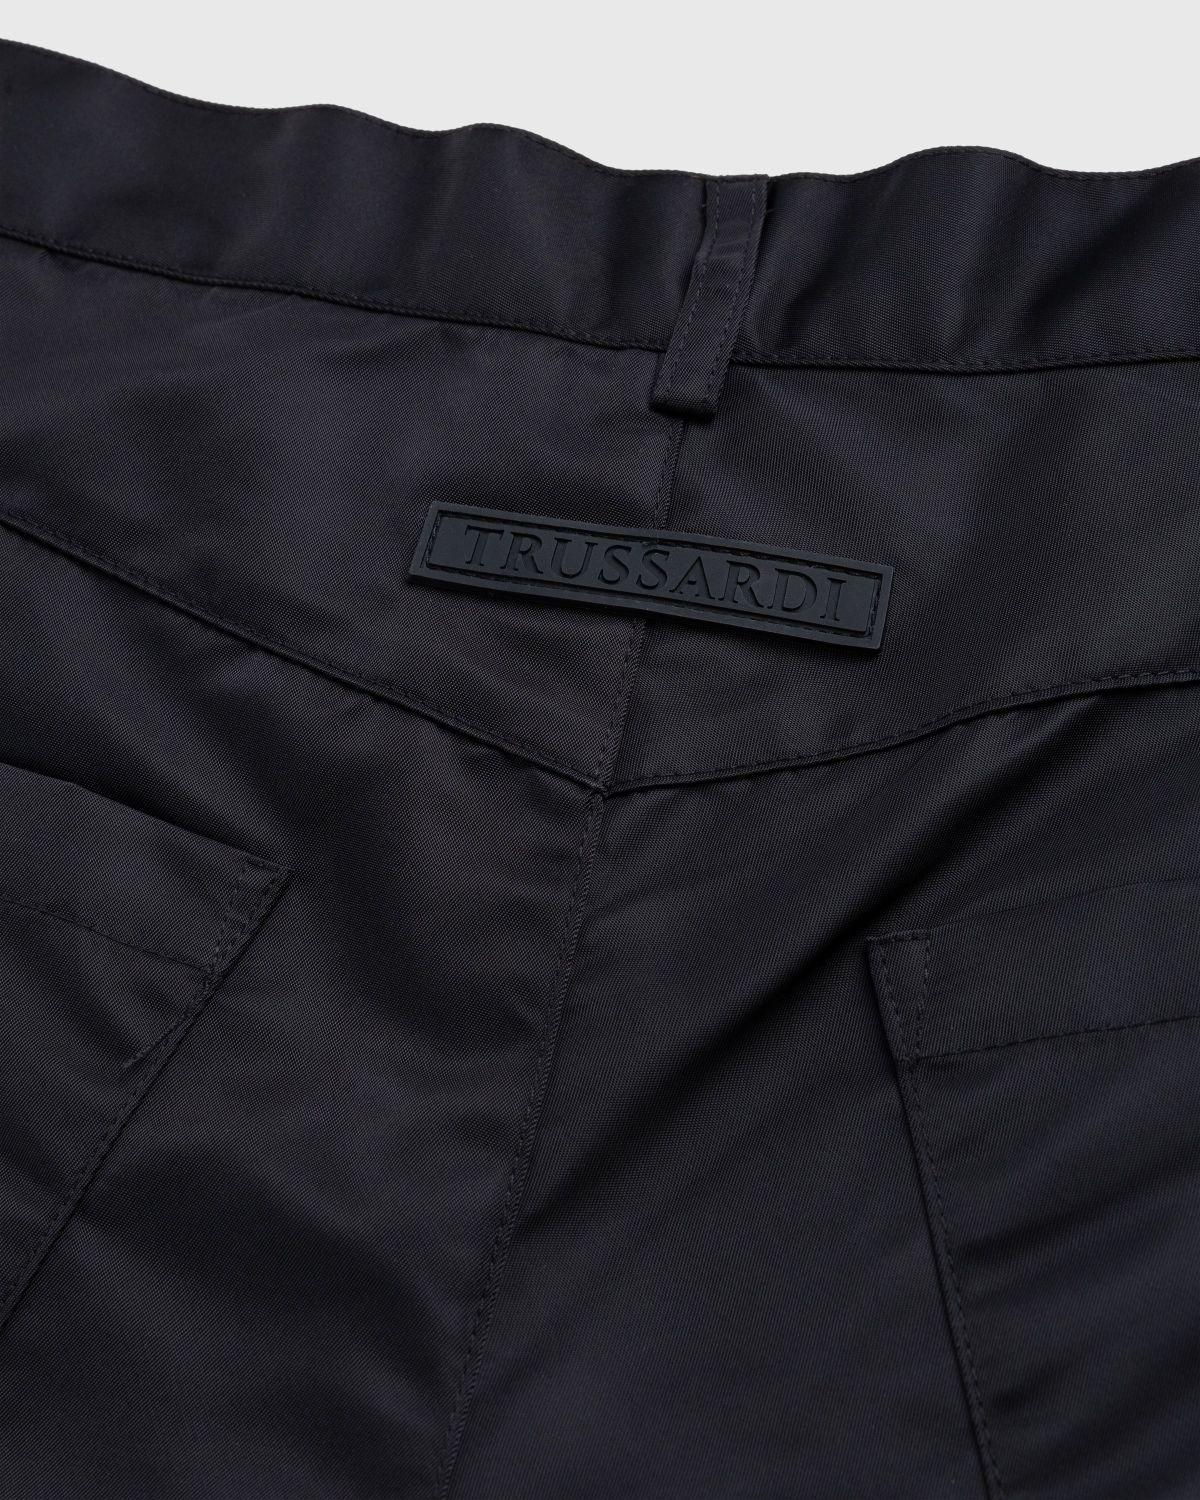 Trussardi – Nylon Shorts Black - Shorts - Black - Image 5